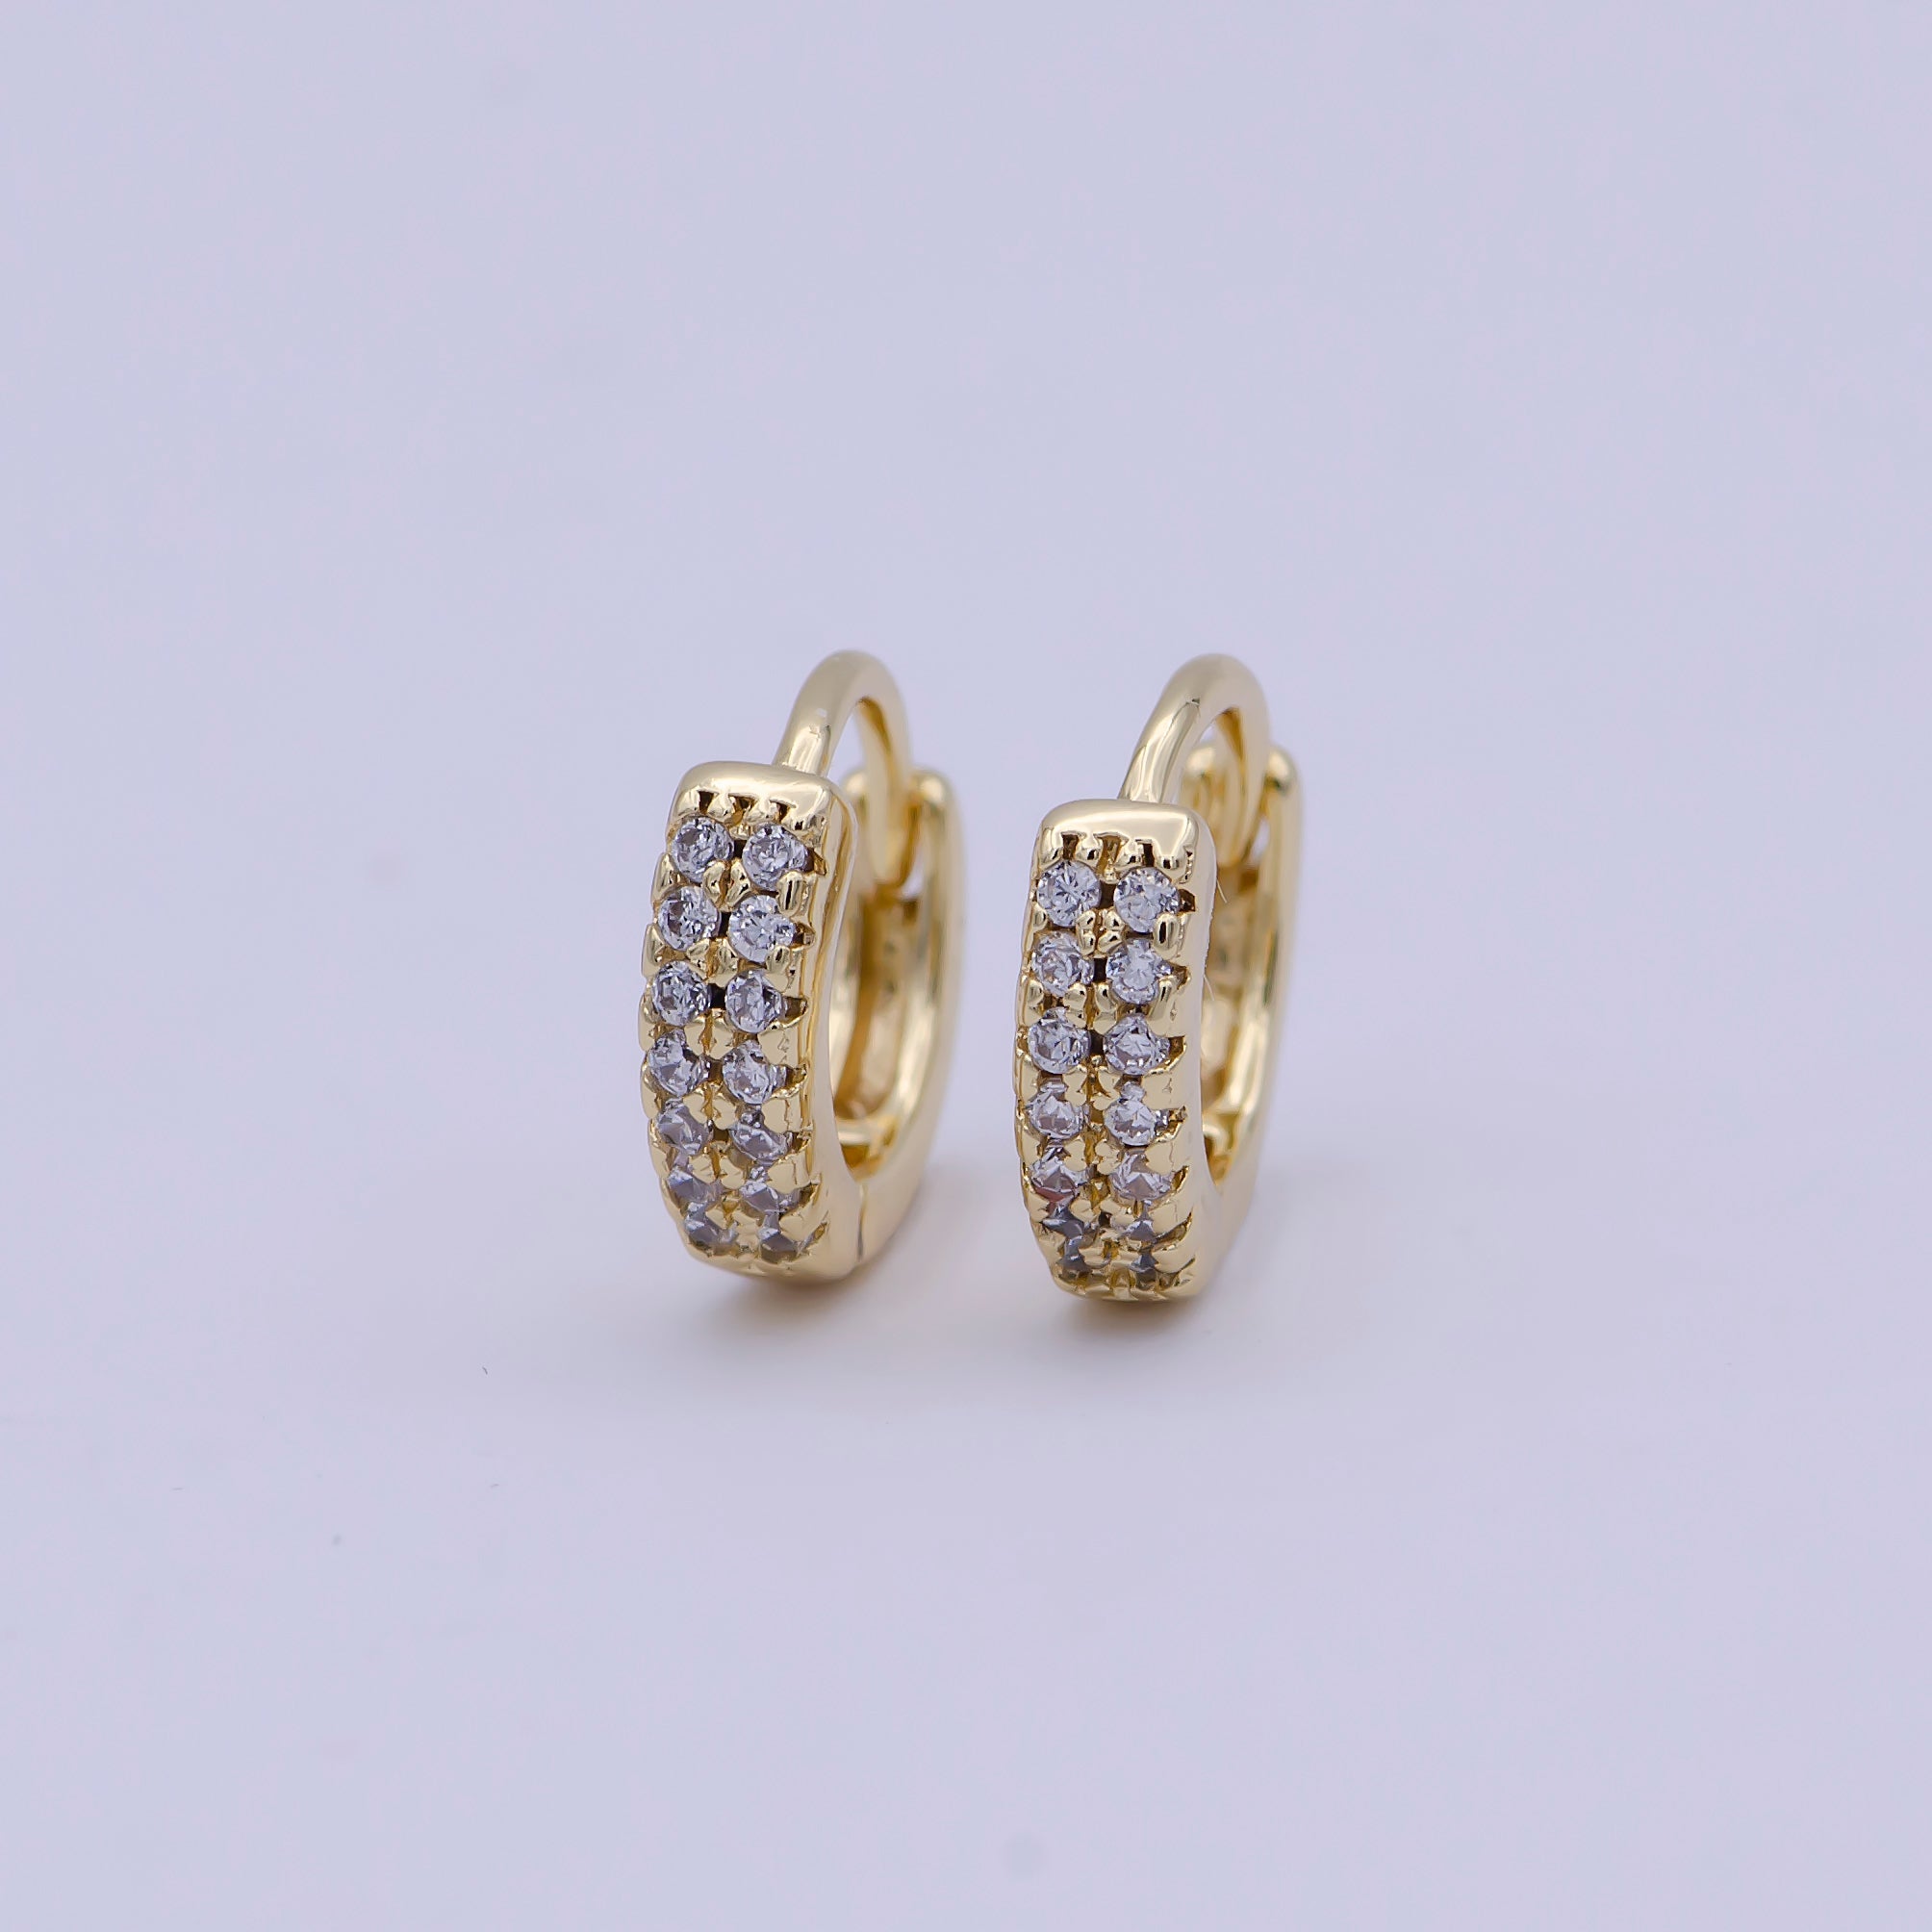 10mm Mini Hoop Earrings • 14k Gold Filled Tiny Earrings • Huggie Hoops Earrings • Minimalist Earrings Wholesale Jewelry T-306 - DLUXCA